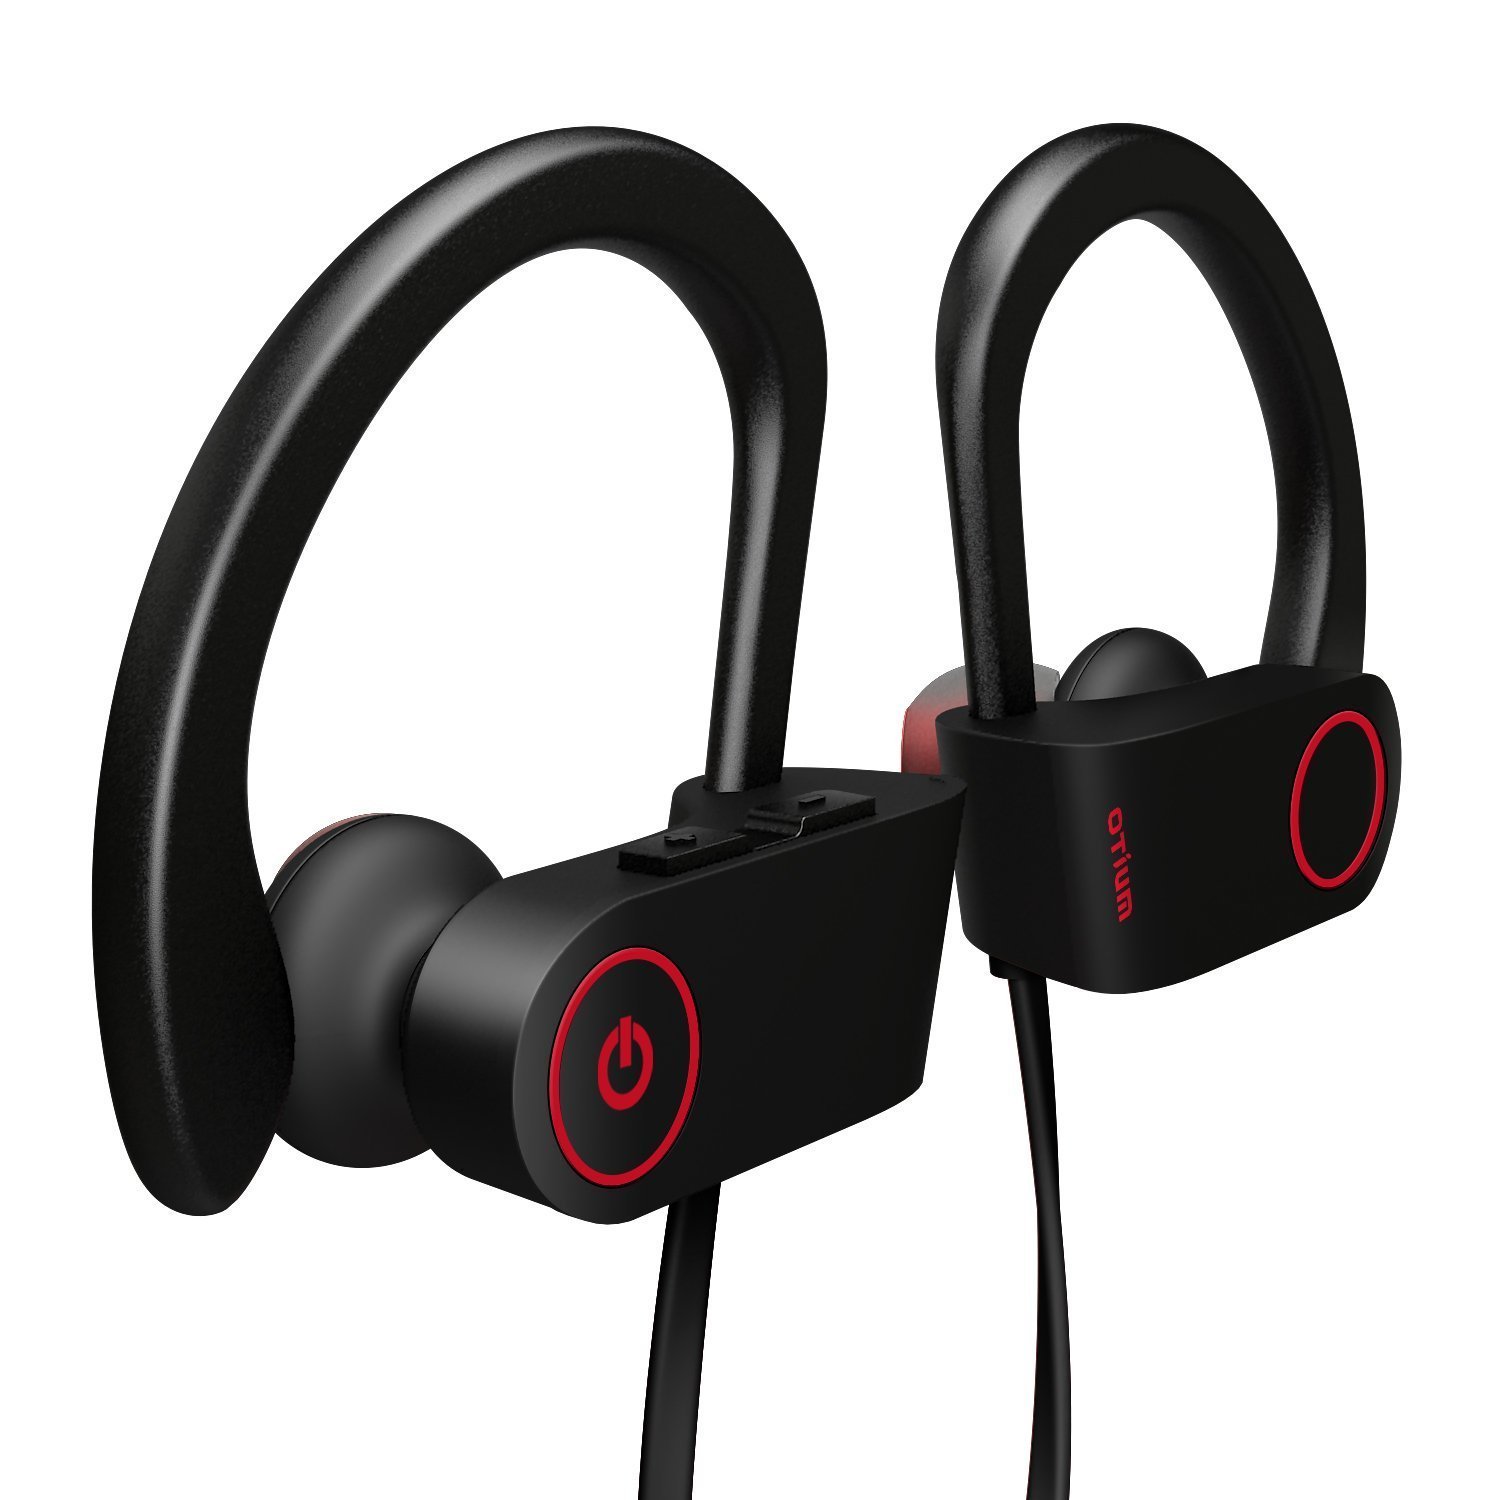 Bluetooth Headphones, Wireless Sports Earphones w/ Mic IPX7 Waterproof HD Stereo Sweatproof In Ear Earbuds for Gym Running Workout 8 Hour Battery Noise Cancelling Headsets - Black